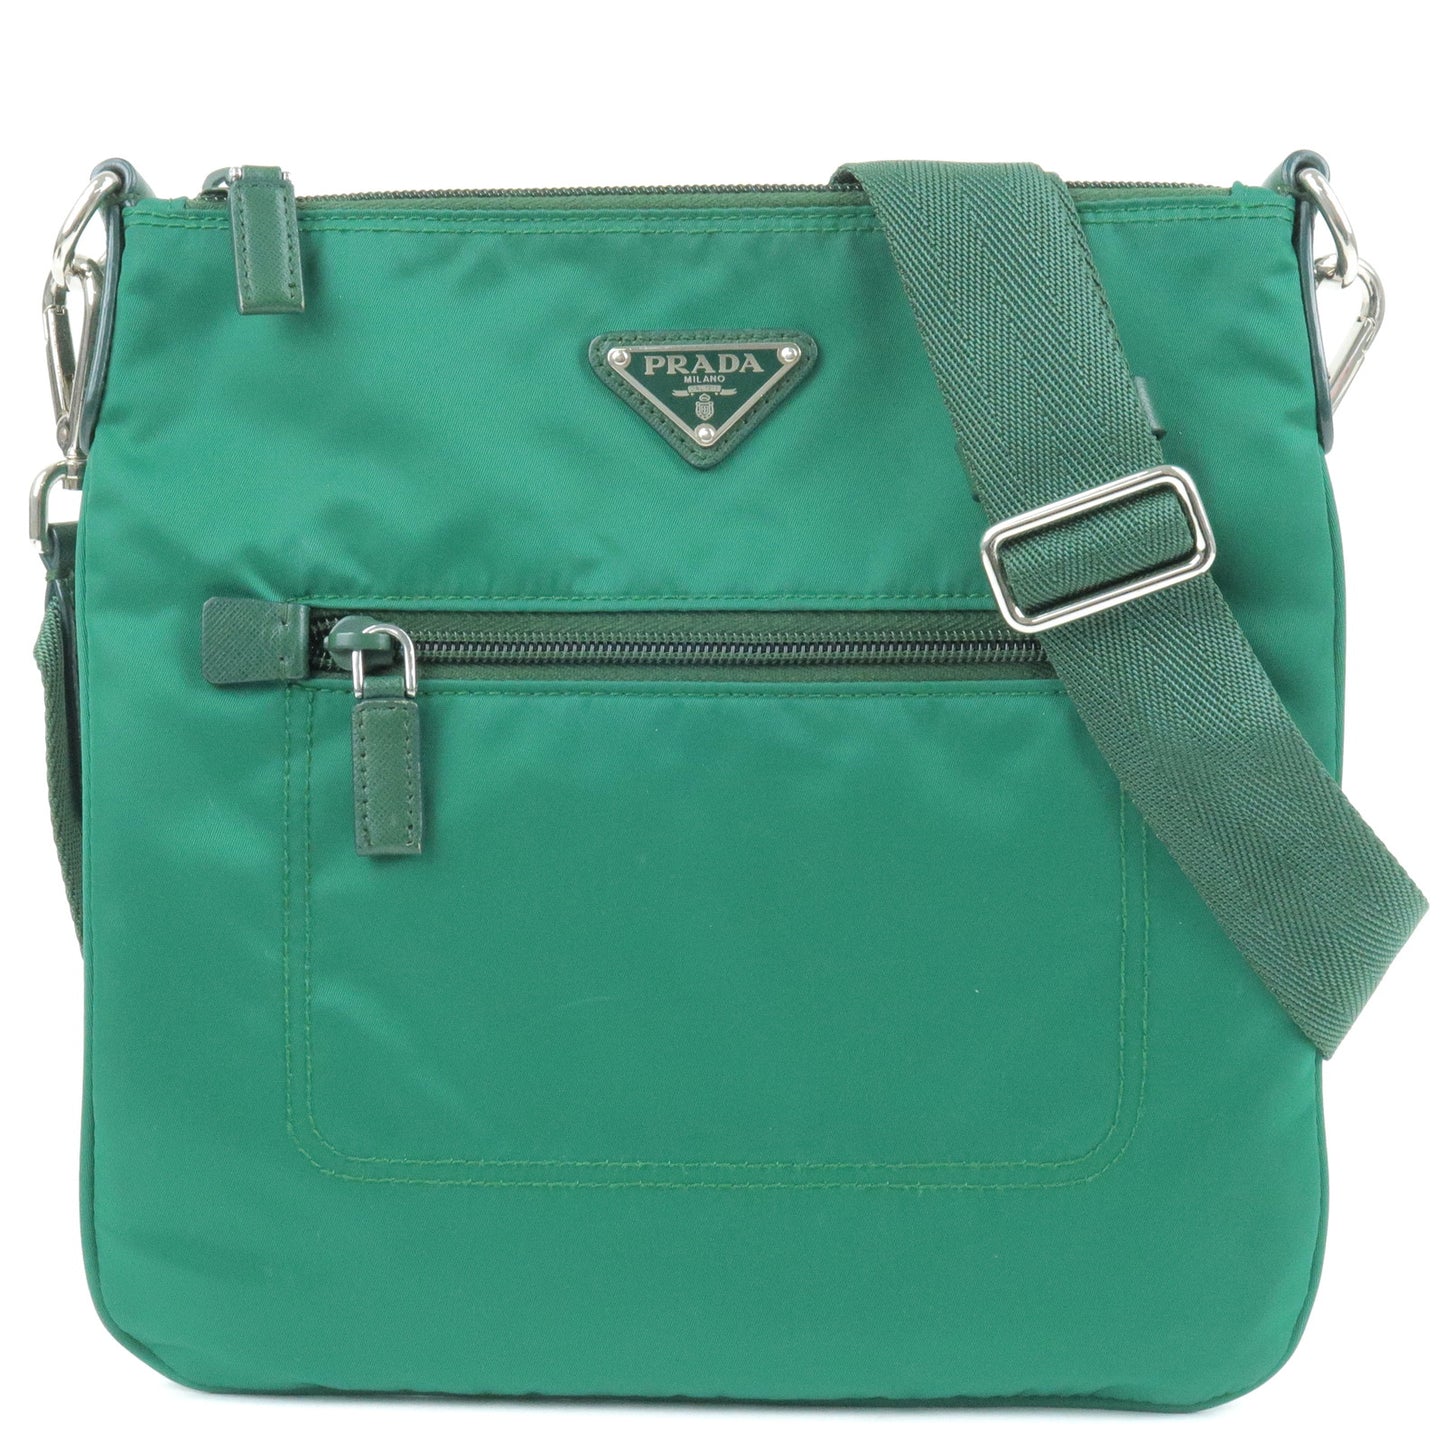 PRADA-Logo-Nylon-Leather-Shoulder-Bag-OLEANDRO-Green-BT0716